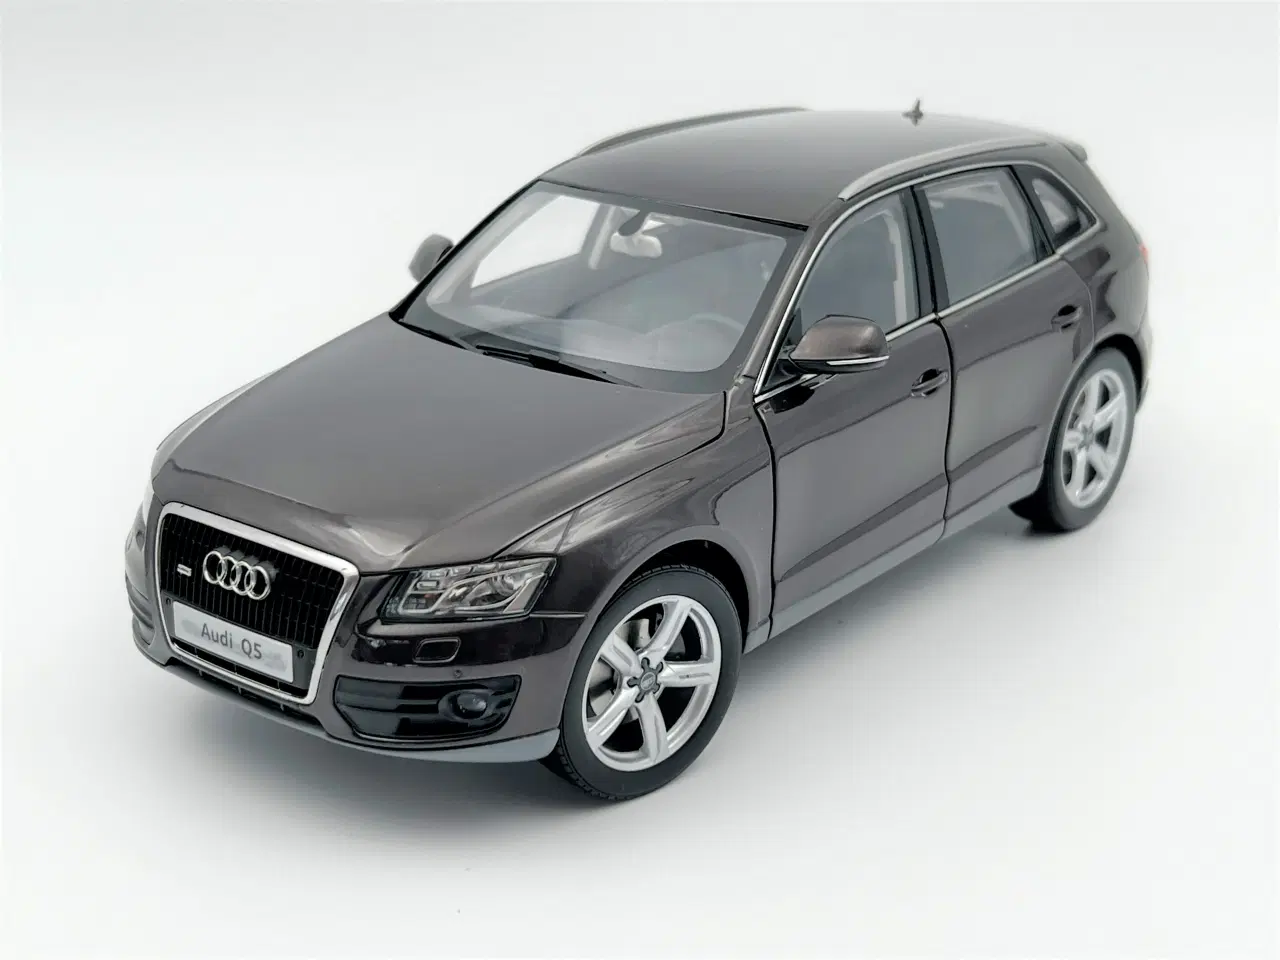 Billede 2 - 2009 Audi Q5 TFSI - 1:18